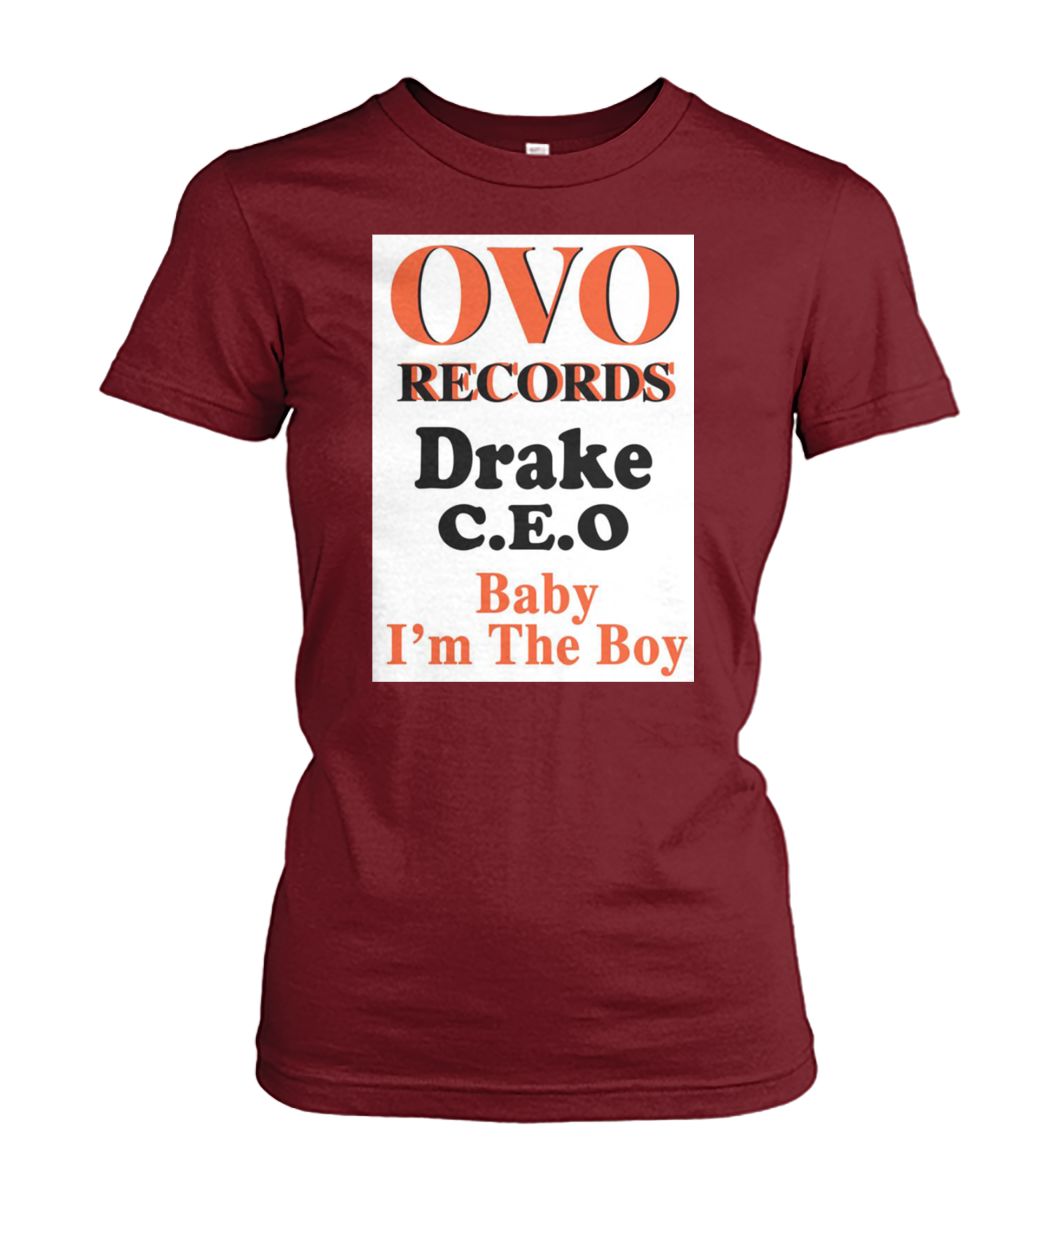 OVO records drake CEO baby I'm the boy women's crew tee